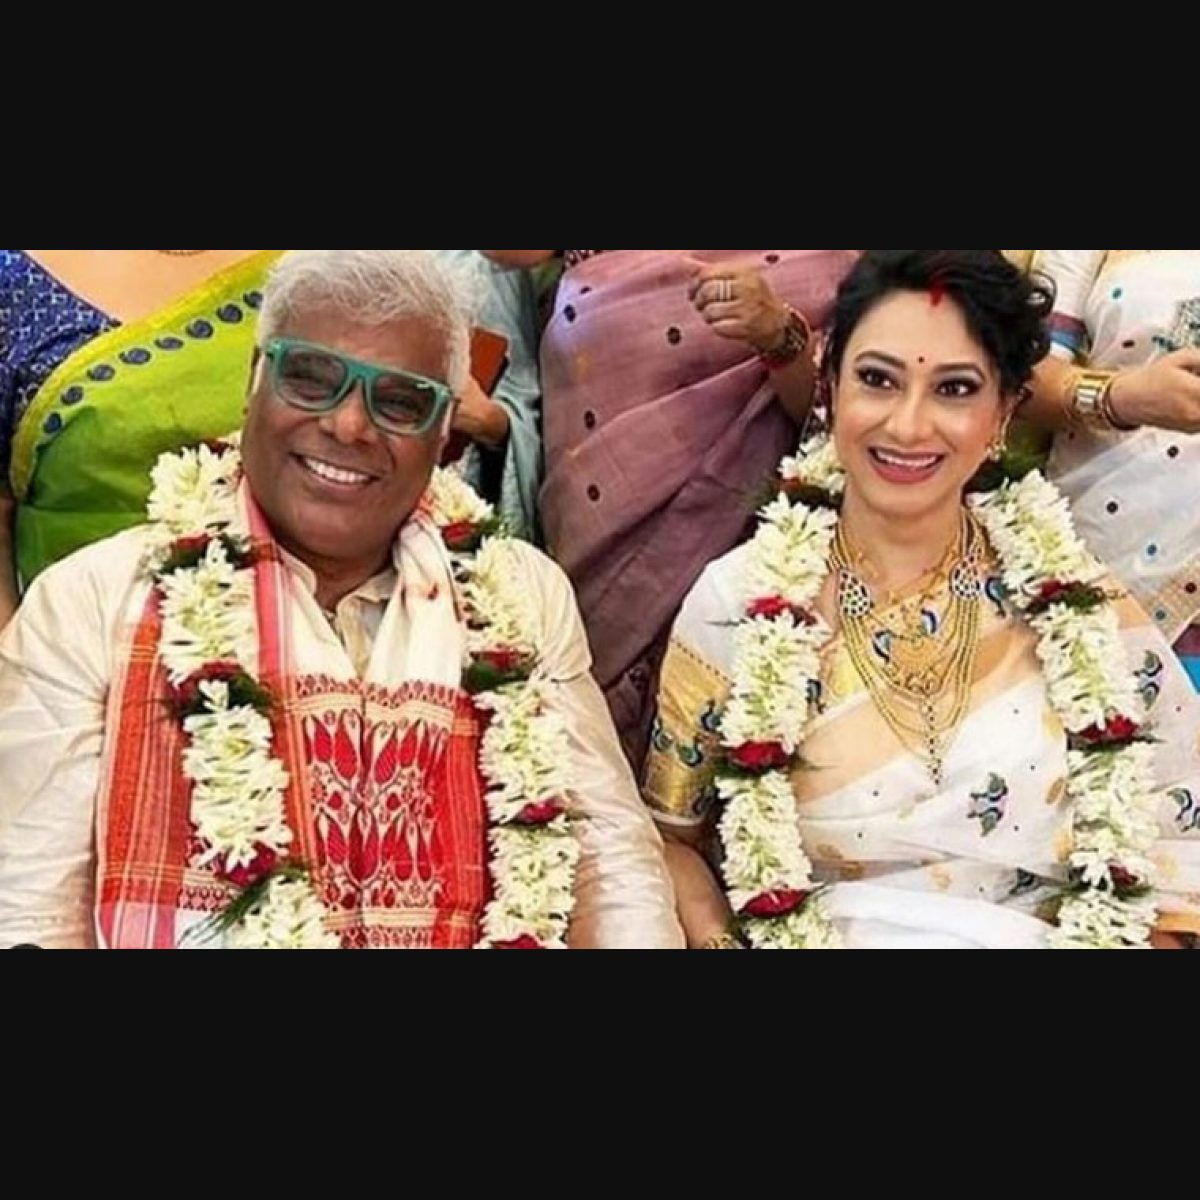 Actor Ashish Vidyarthi marries Rupali Barua in Kolkata. See viral images of  newly-wedded couple